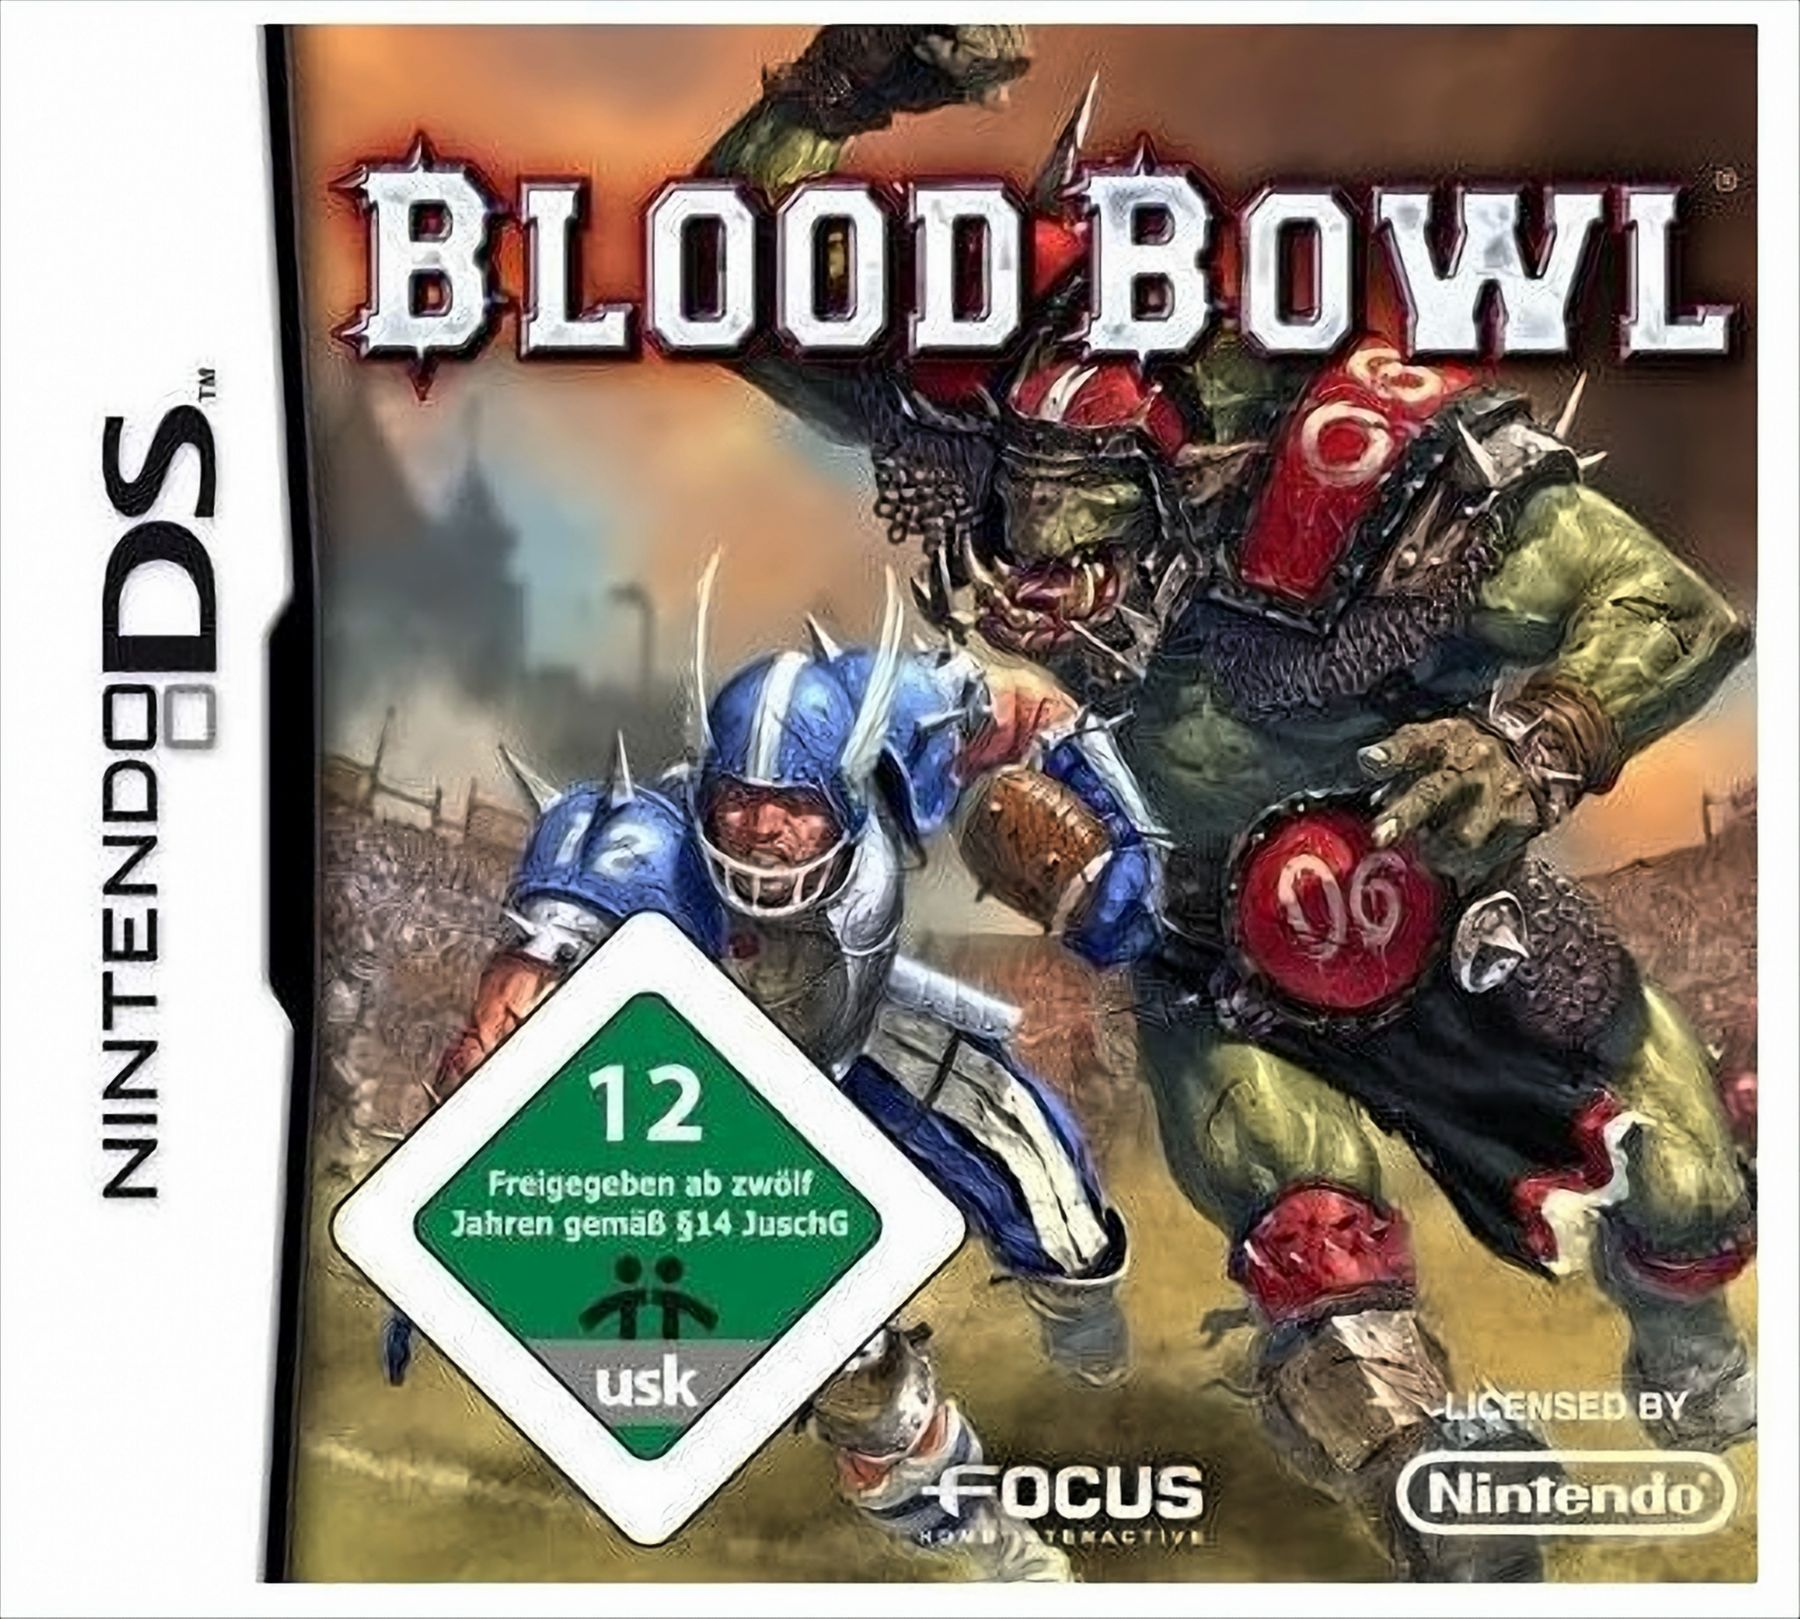 Bowl [Nintendo Blood DS] -